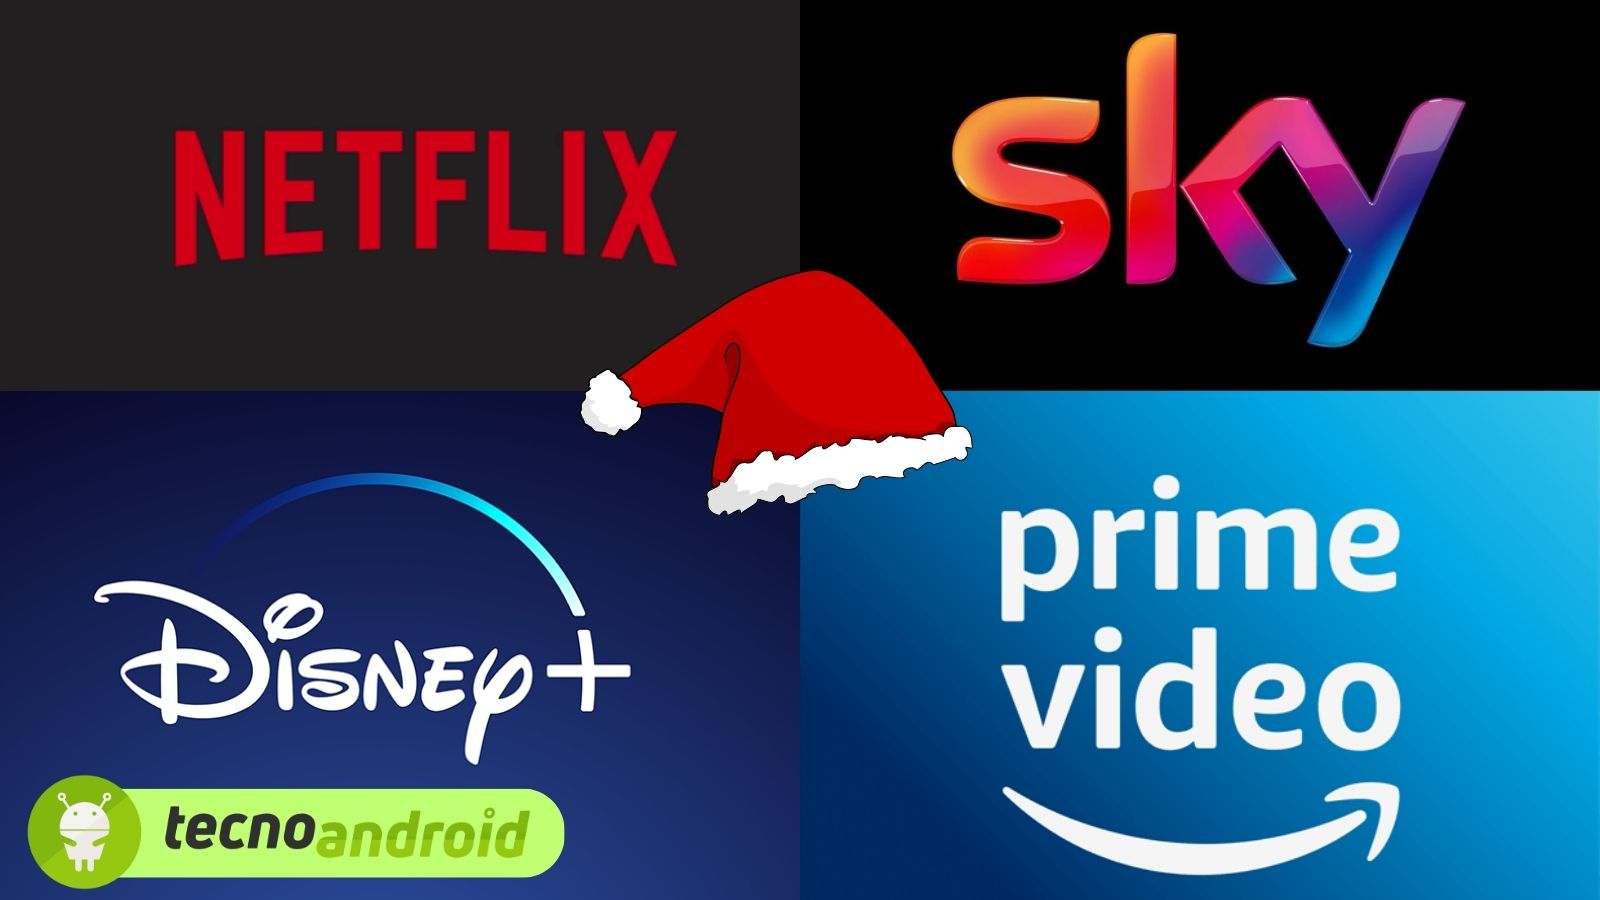 Netflix, Prime Video, Sky e Disney+: le serieTV perfette per Natale